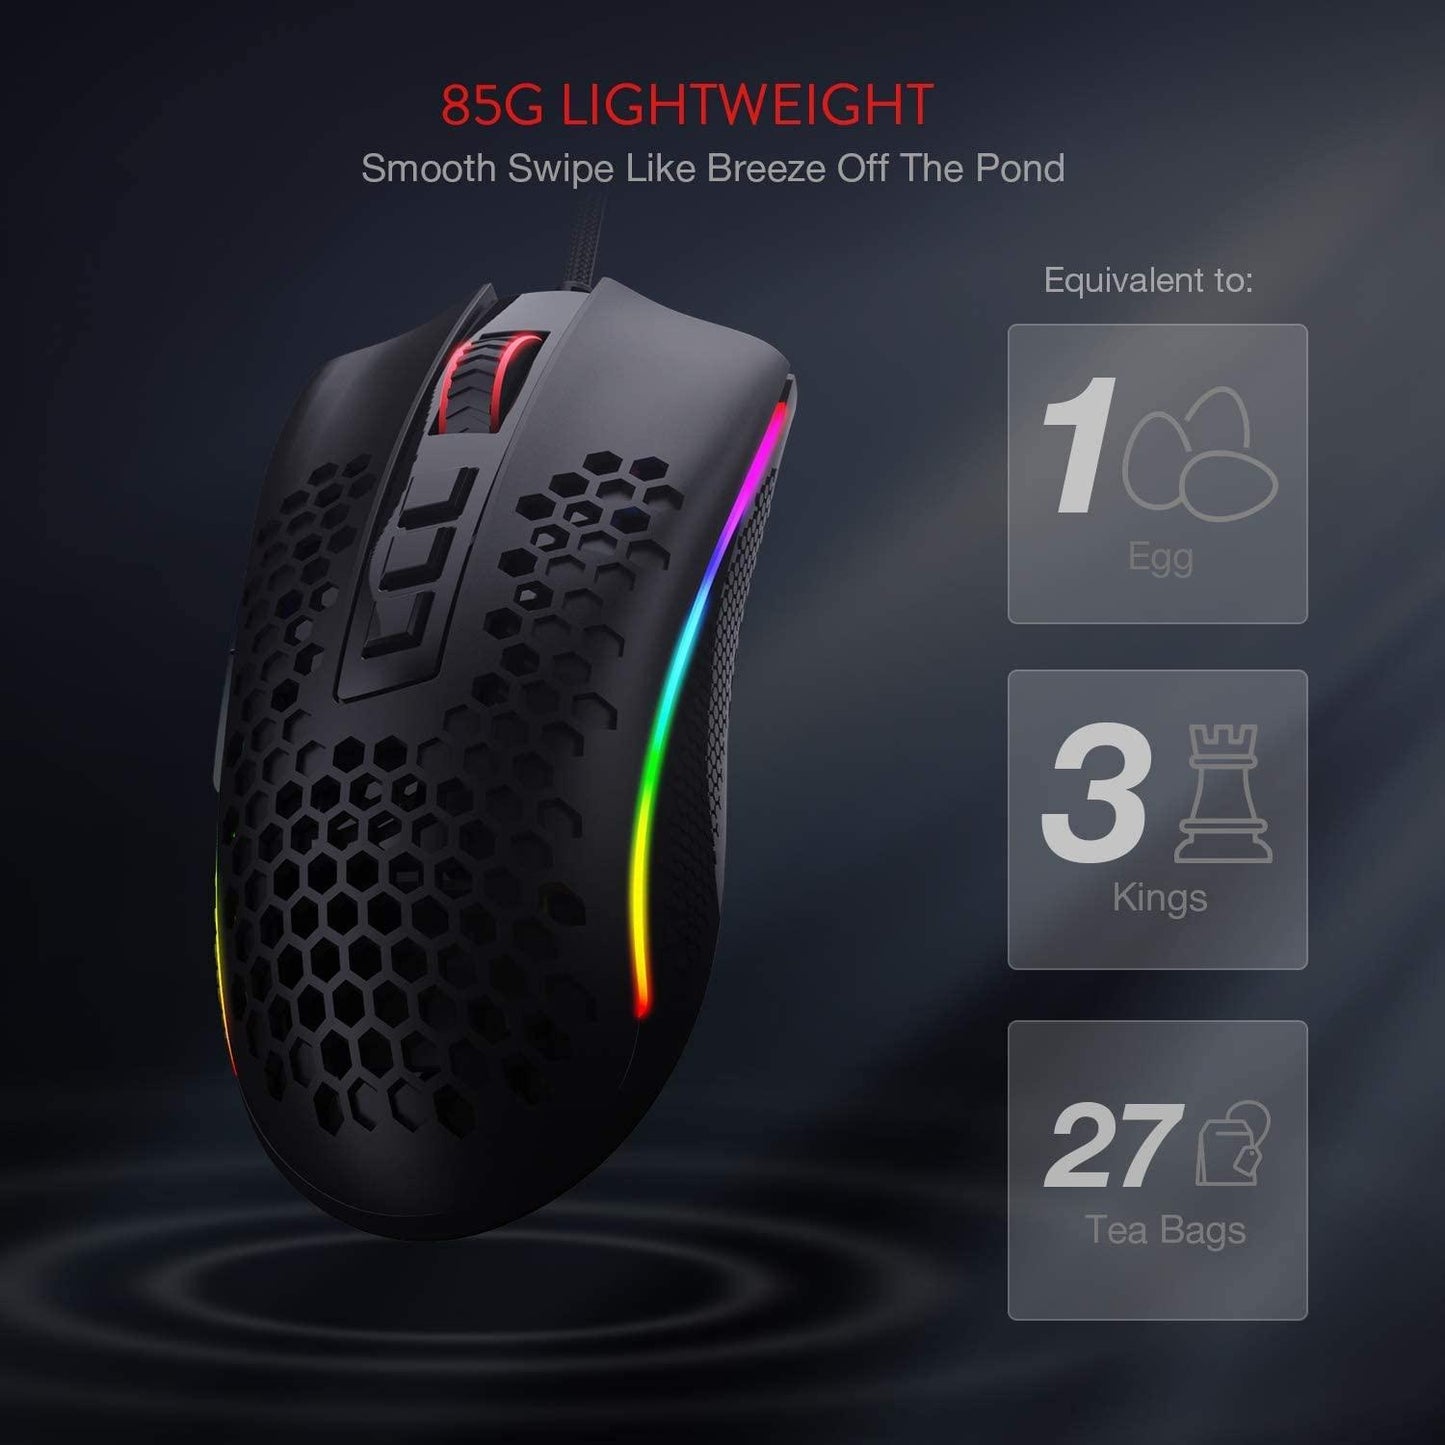 Redragon M808 Storm Ultralight Honeycomb RGB Gaming Mouse - product details lightweight - b.savvi